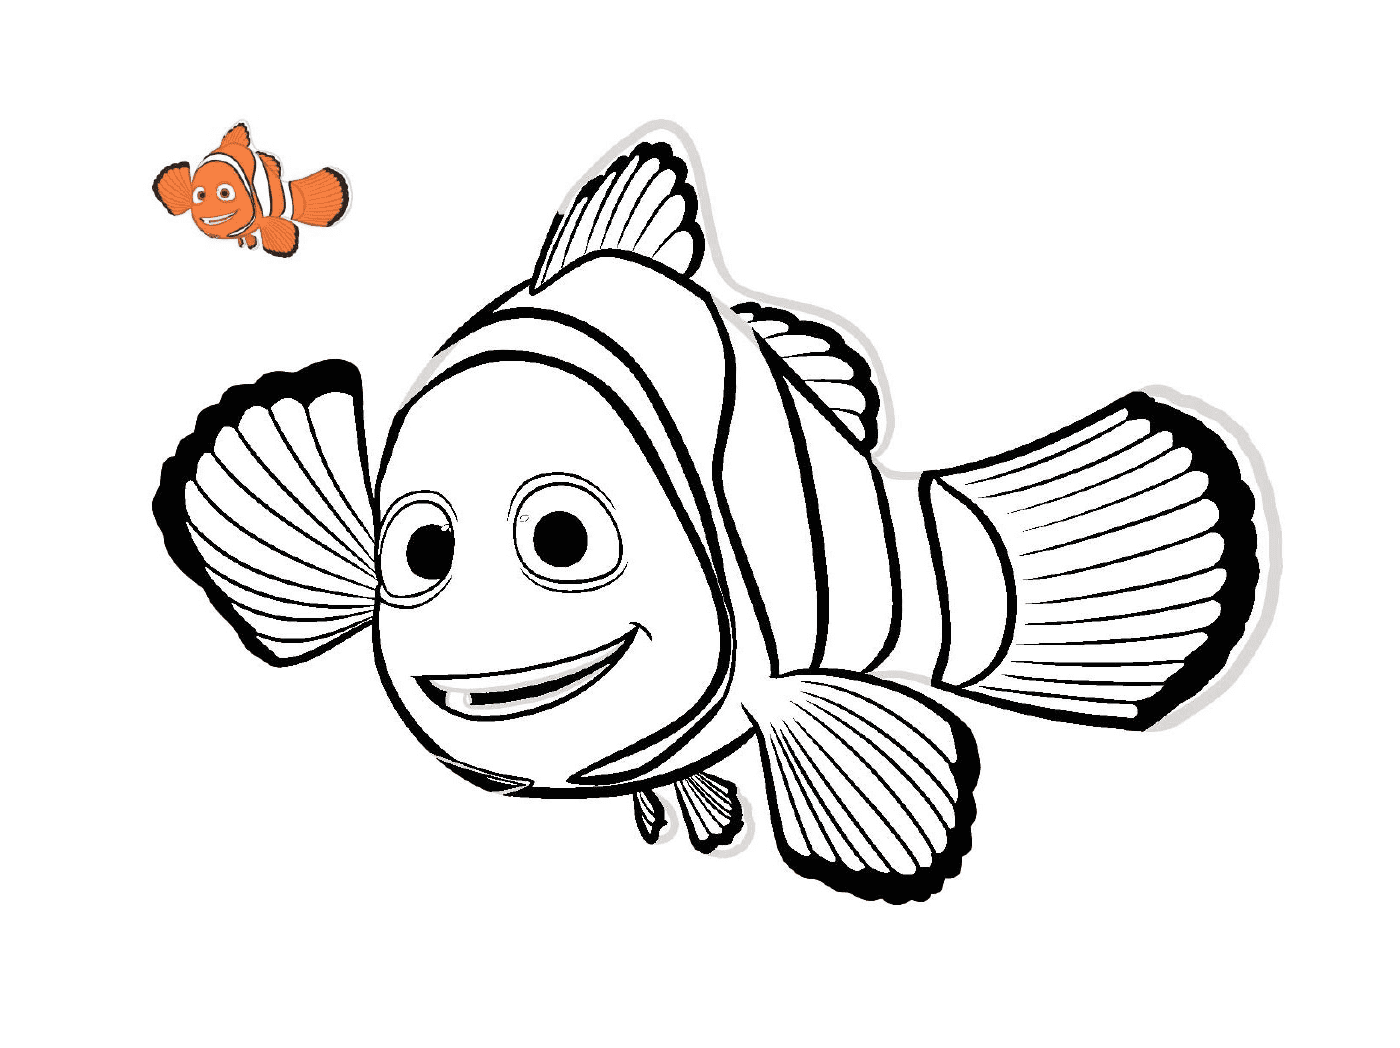  Nemo 2, a redfish 